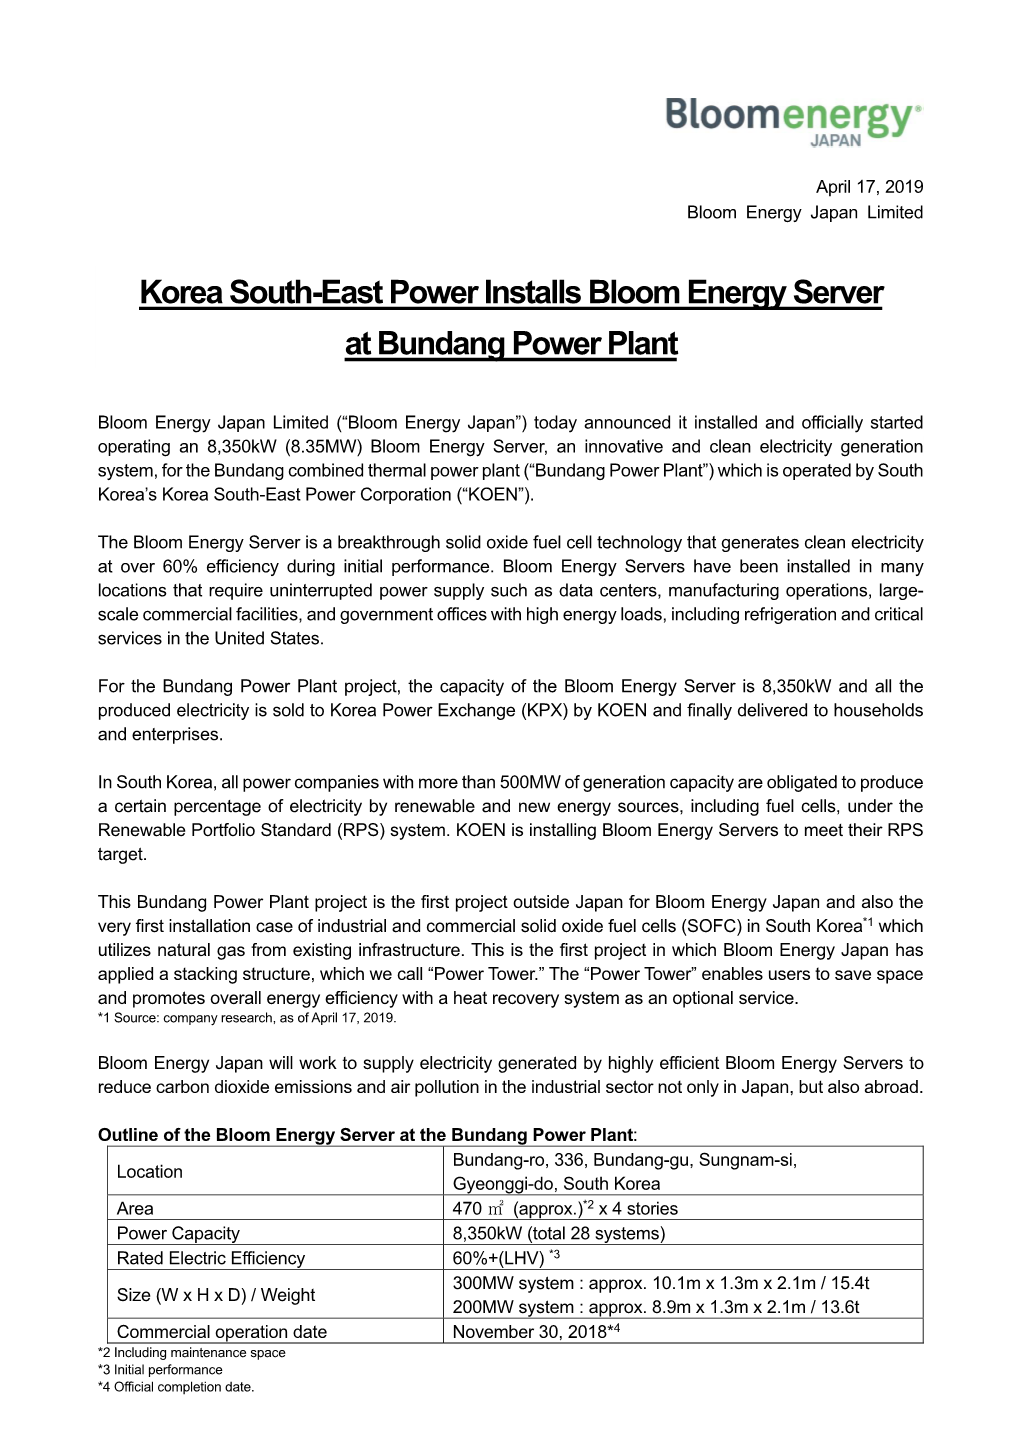 Korea South-East Power Installs Bloom Energy Server to Bundang